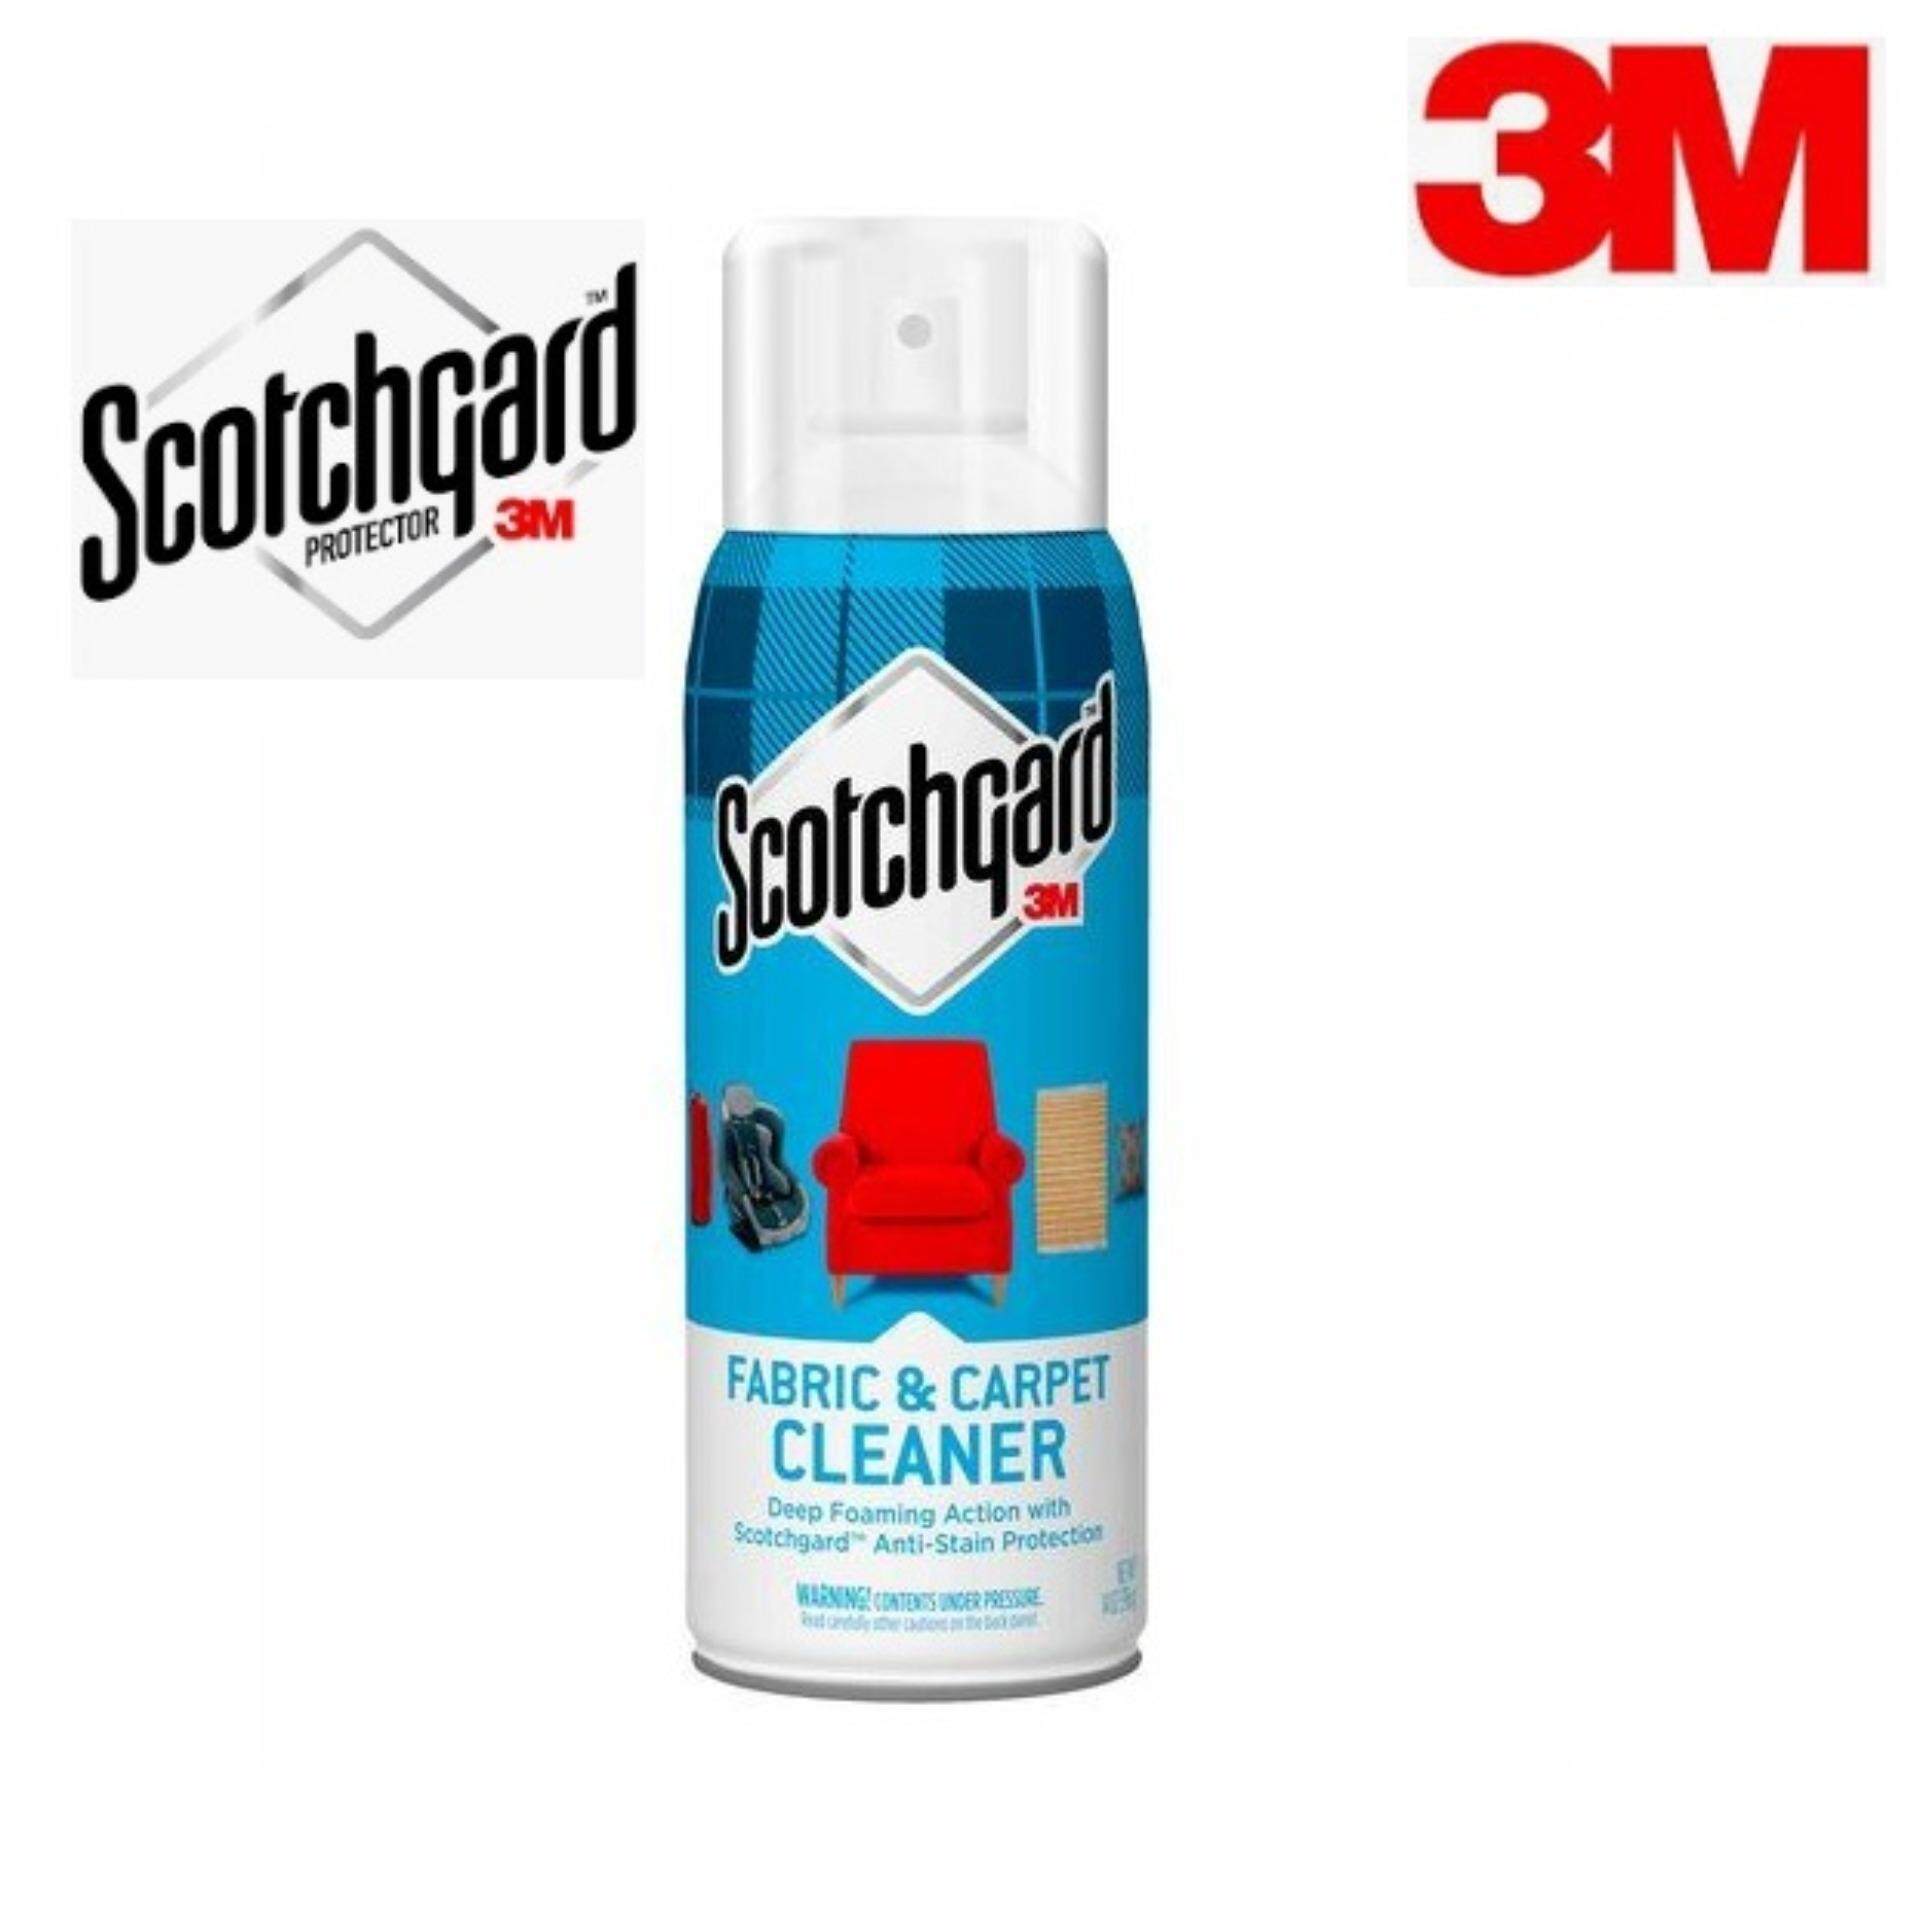 3M สเปรย์ทำความสะอาดผ้าและพรม Fabric & Carpet Cleaner 14oz (396g.) Scotchgard